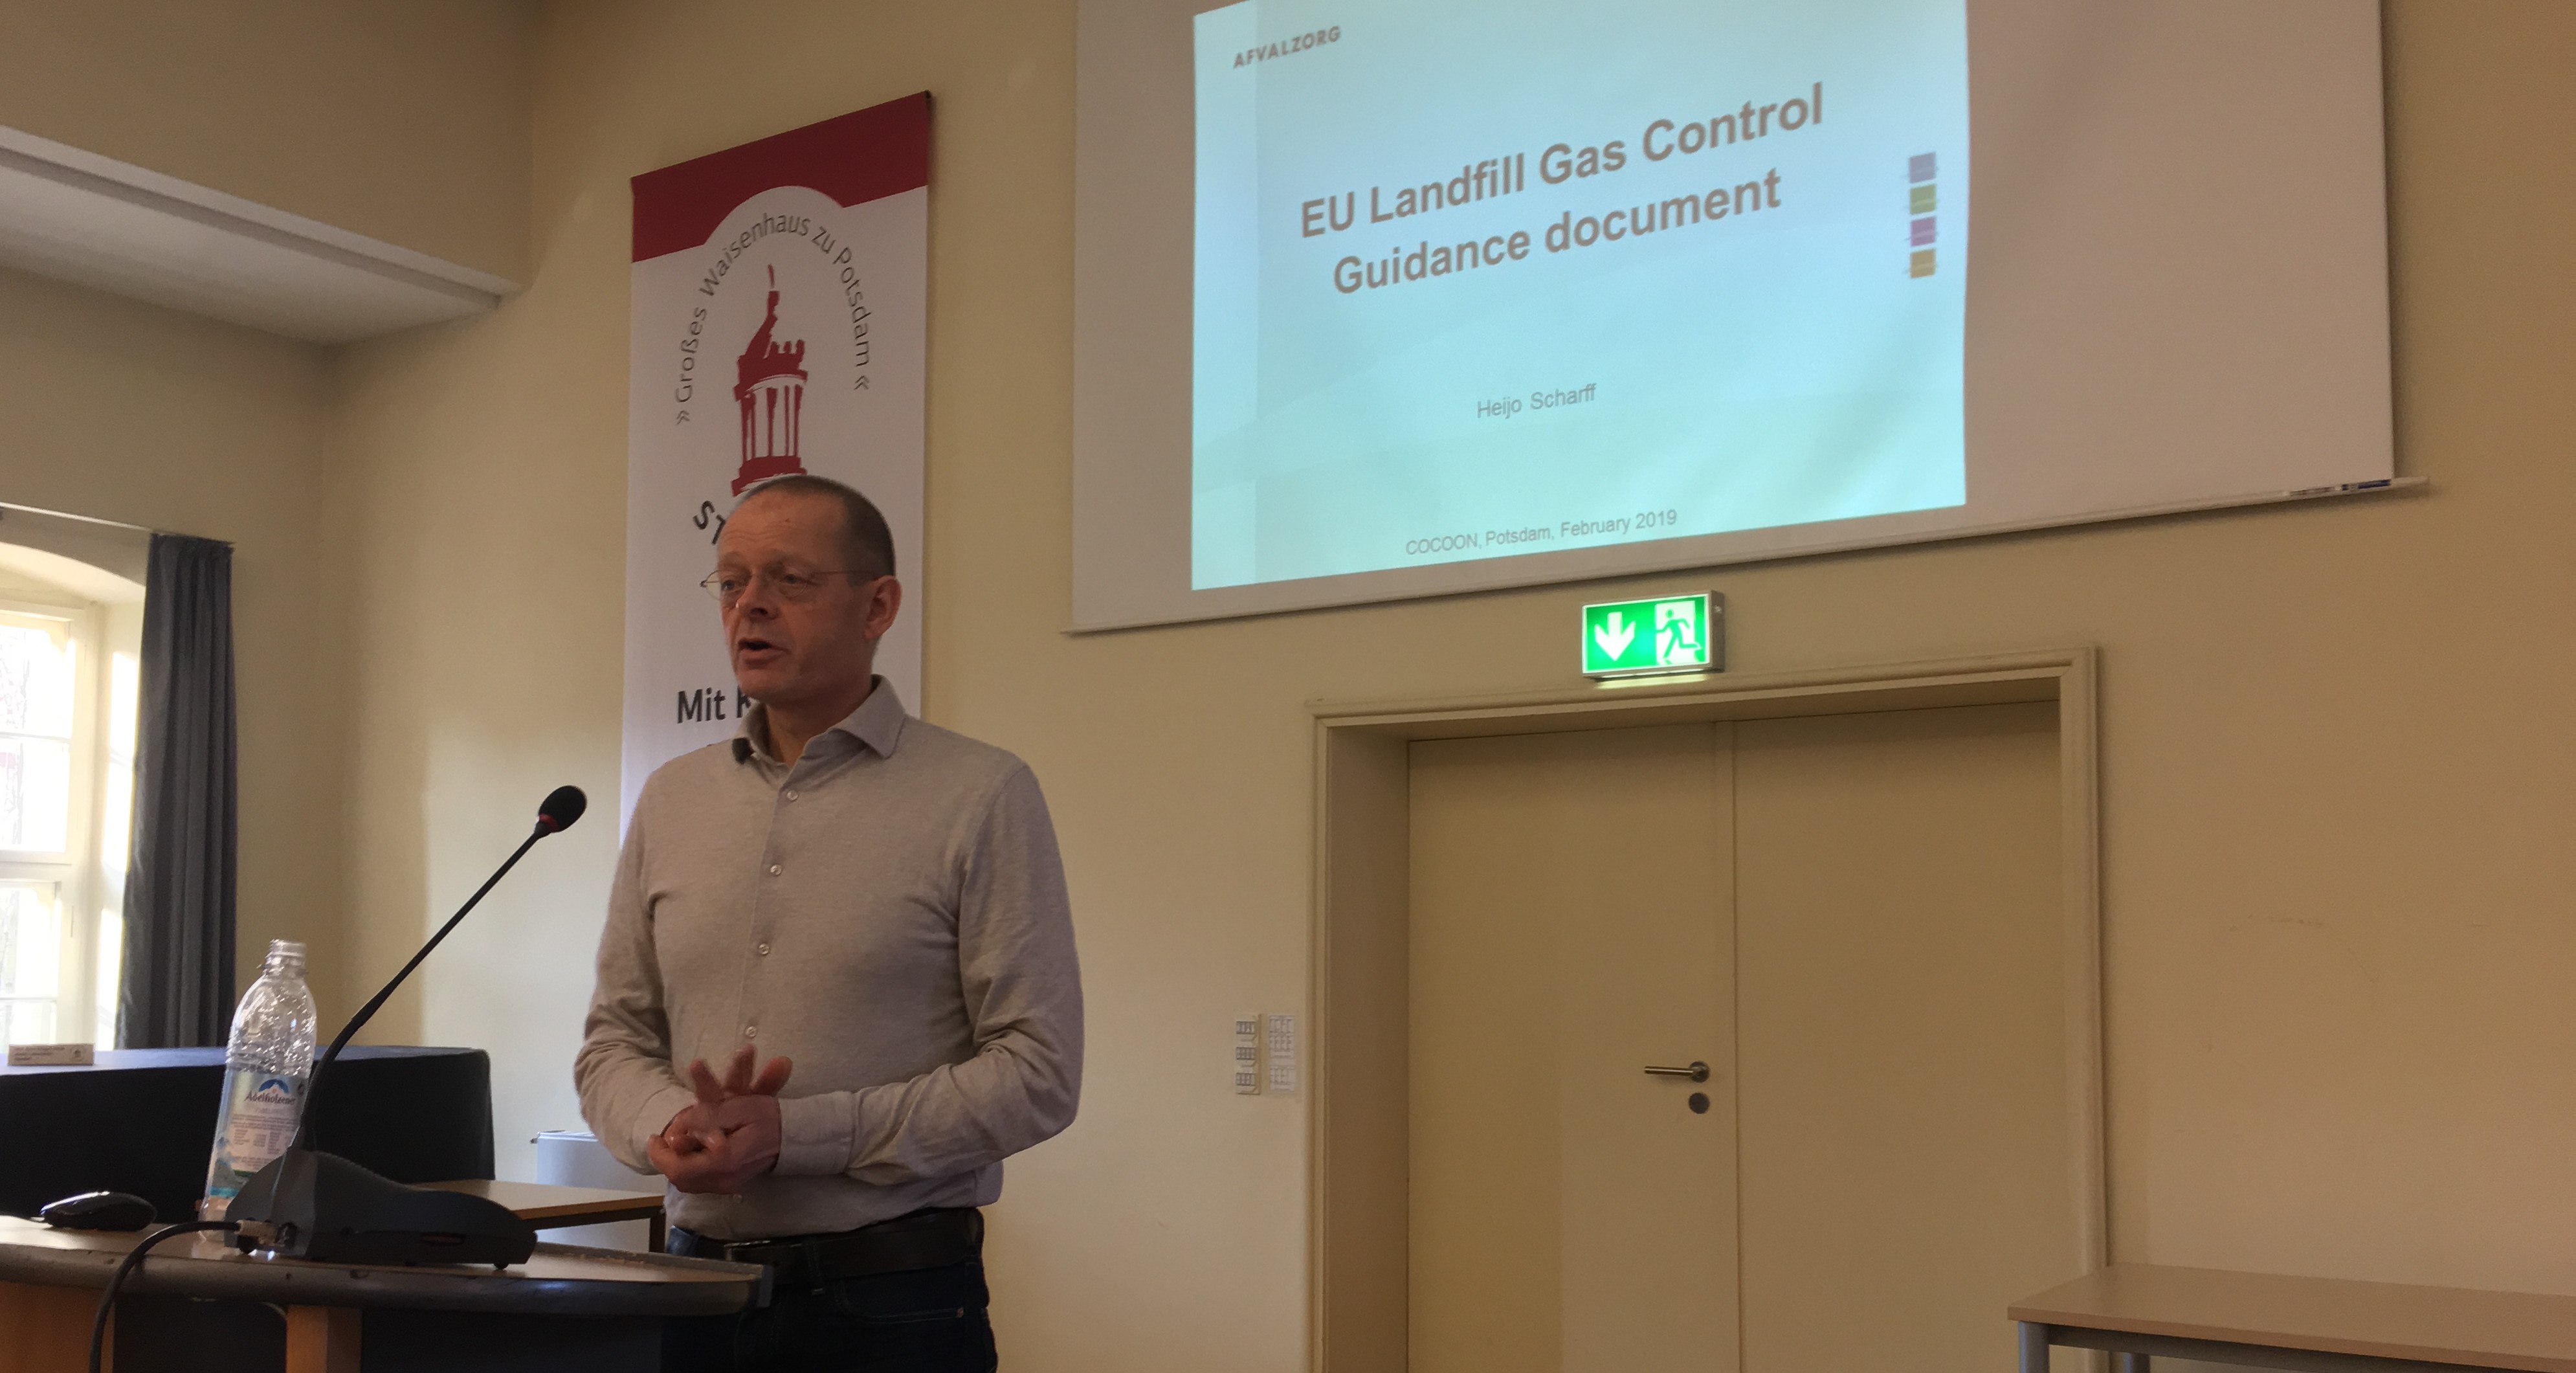 The EU Landfill Gas Control Guidance document